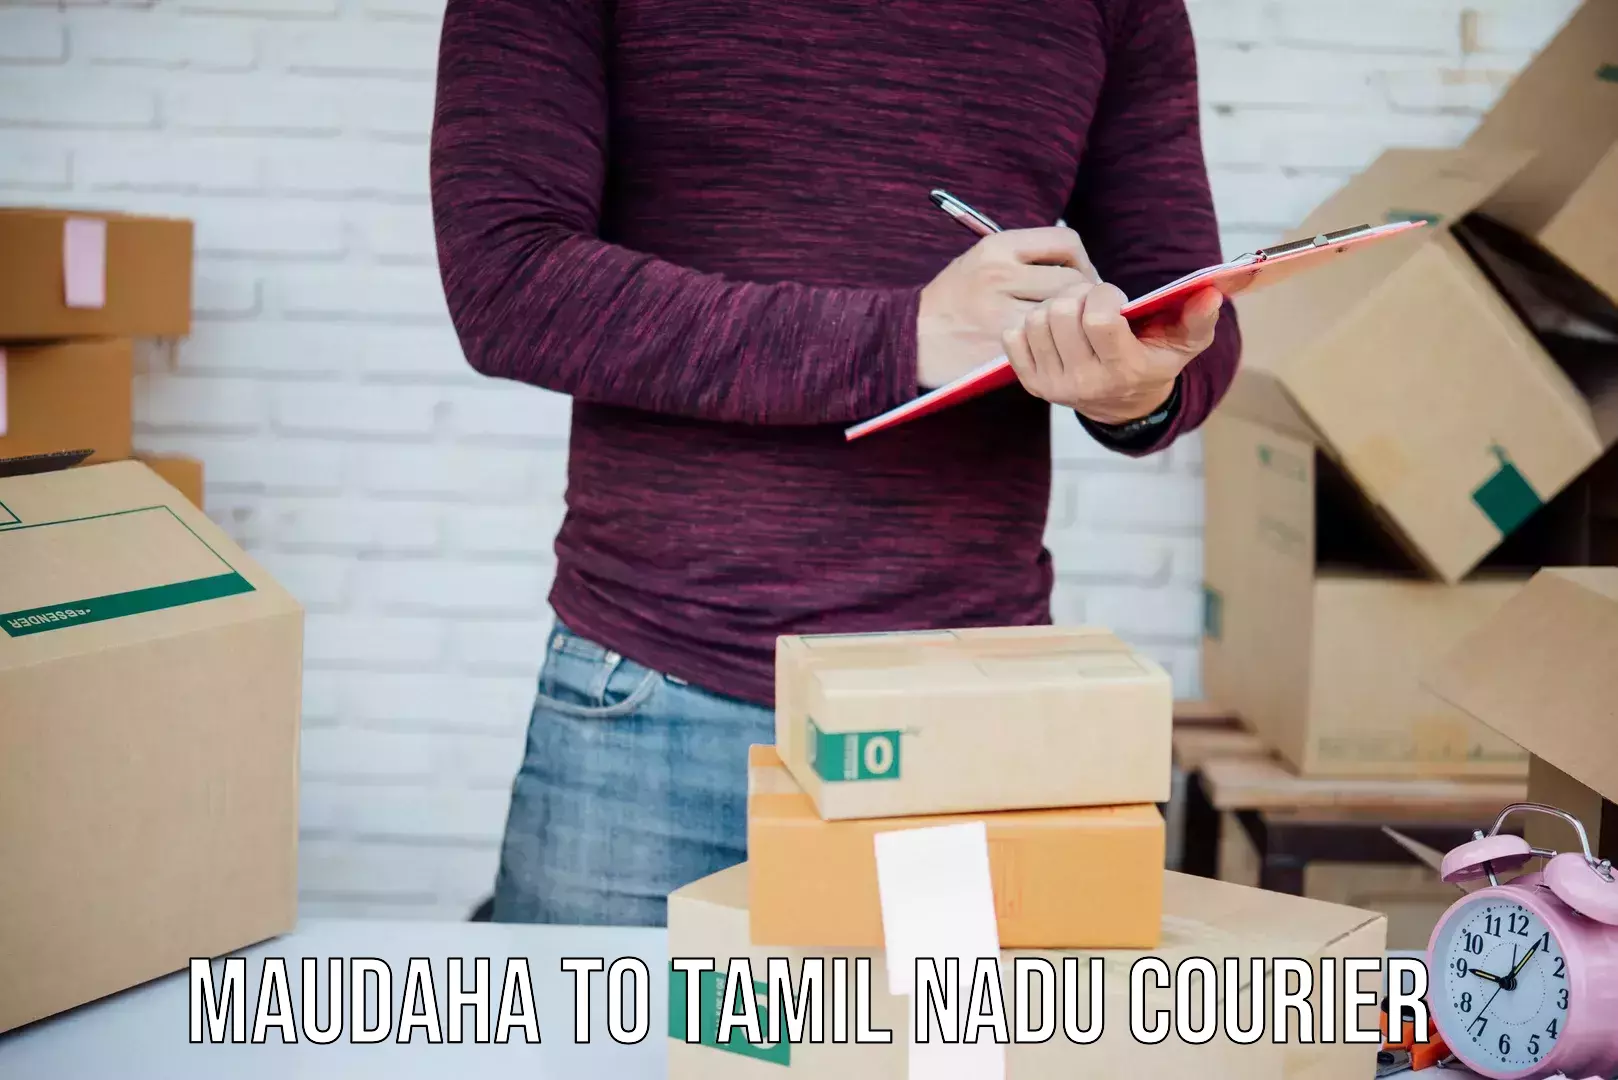 Courier service partnerships in Maudaha to Vandavasi